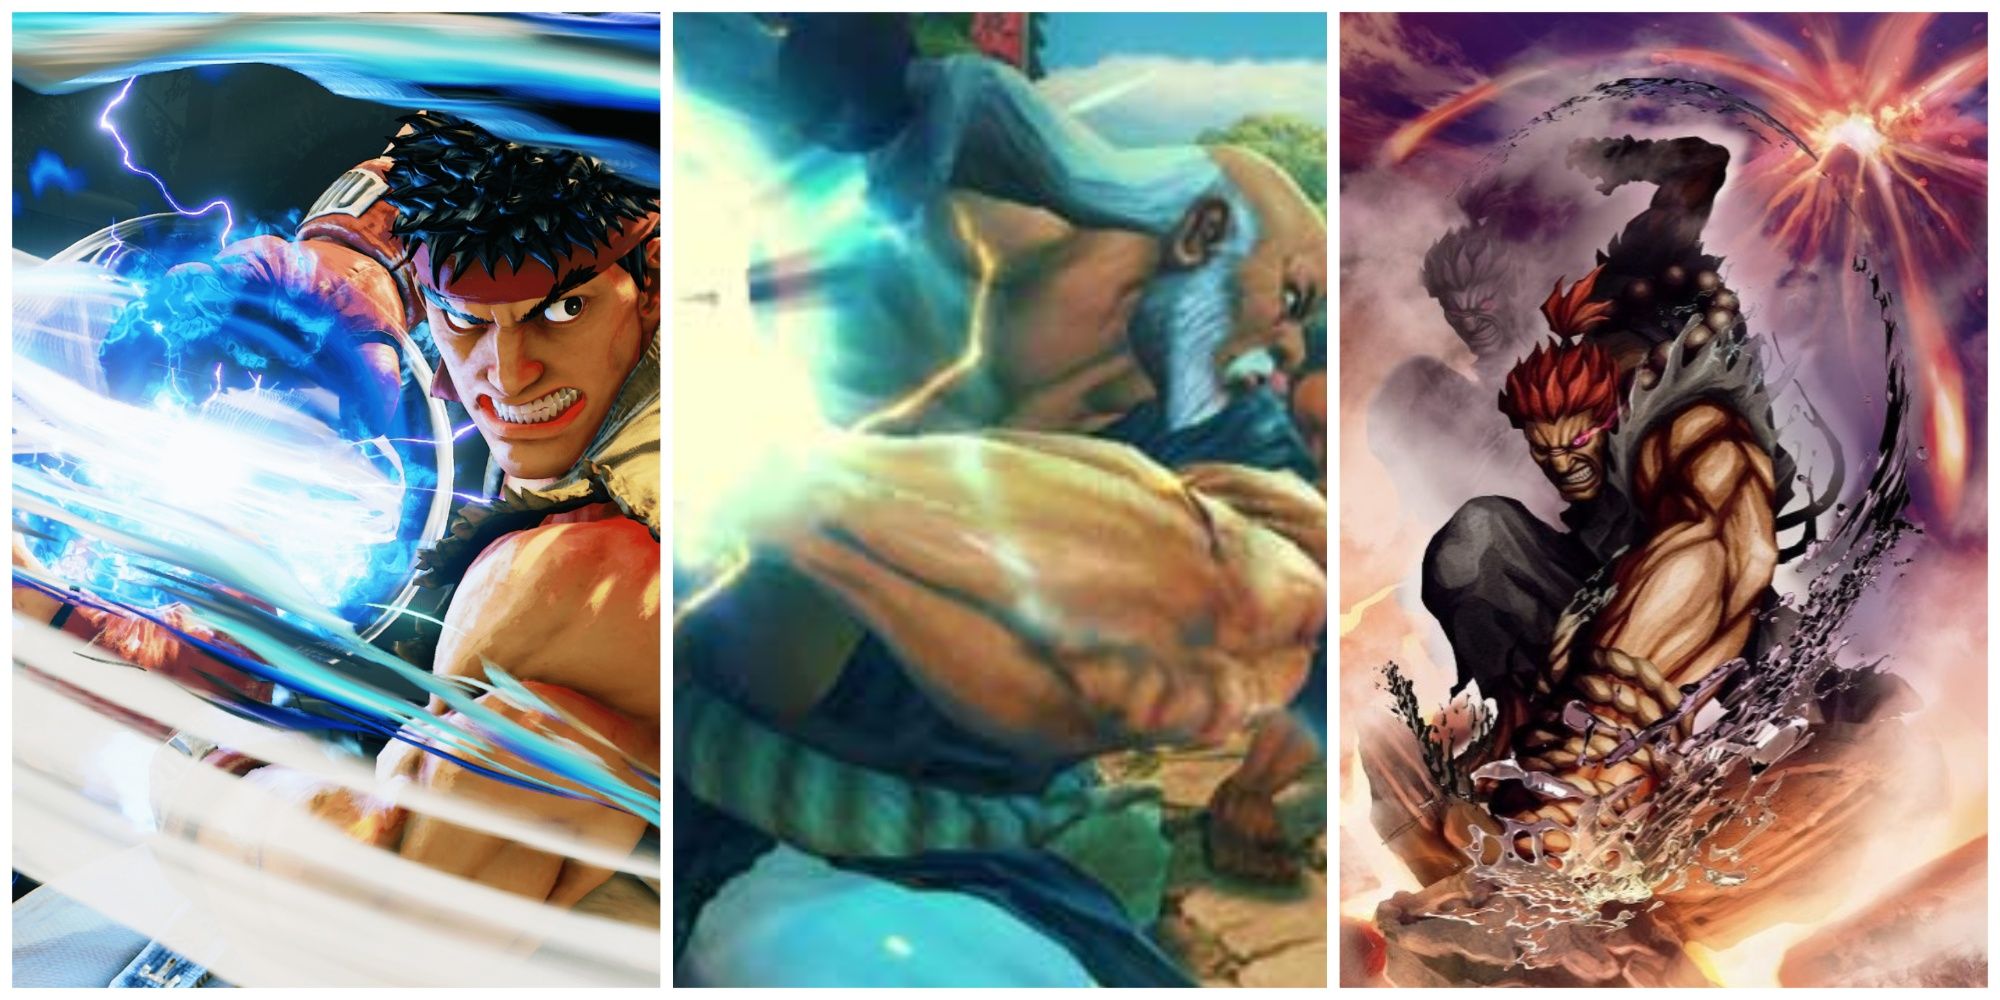 Ryu using a powerful Hadoken in SFV, Gouken using Denjin Hadoken in SFIV, Akuma official art from Street Fighter X Tekken